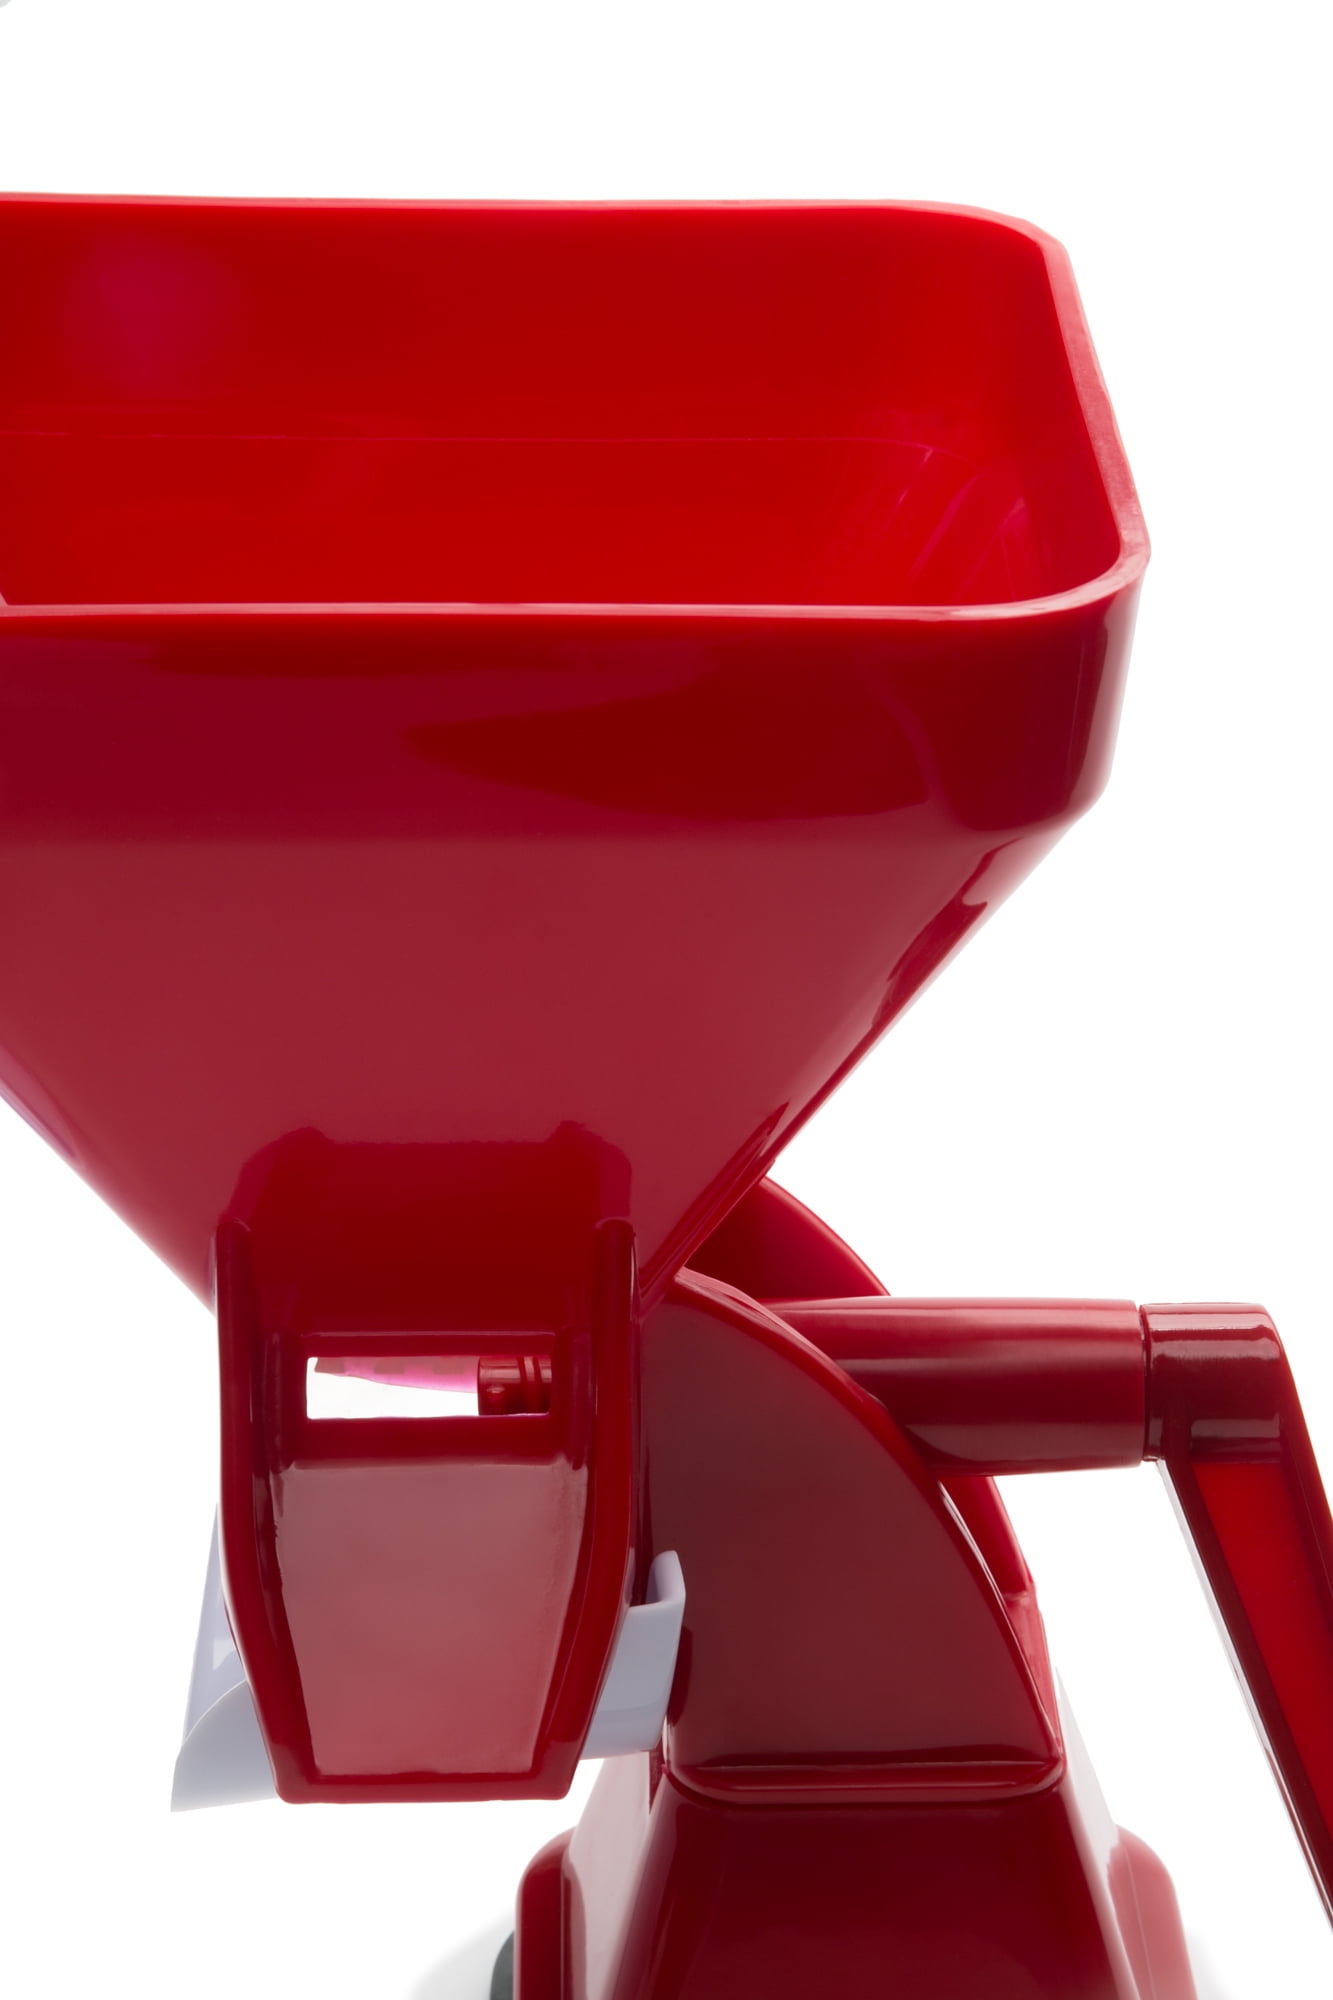 Fox Run Red Plastic Manual Crank Tomato Press / Sauce Maker with